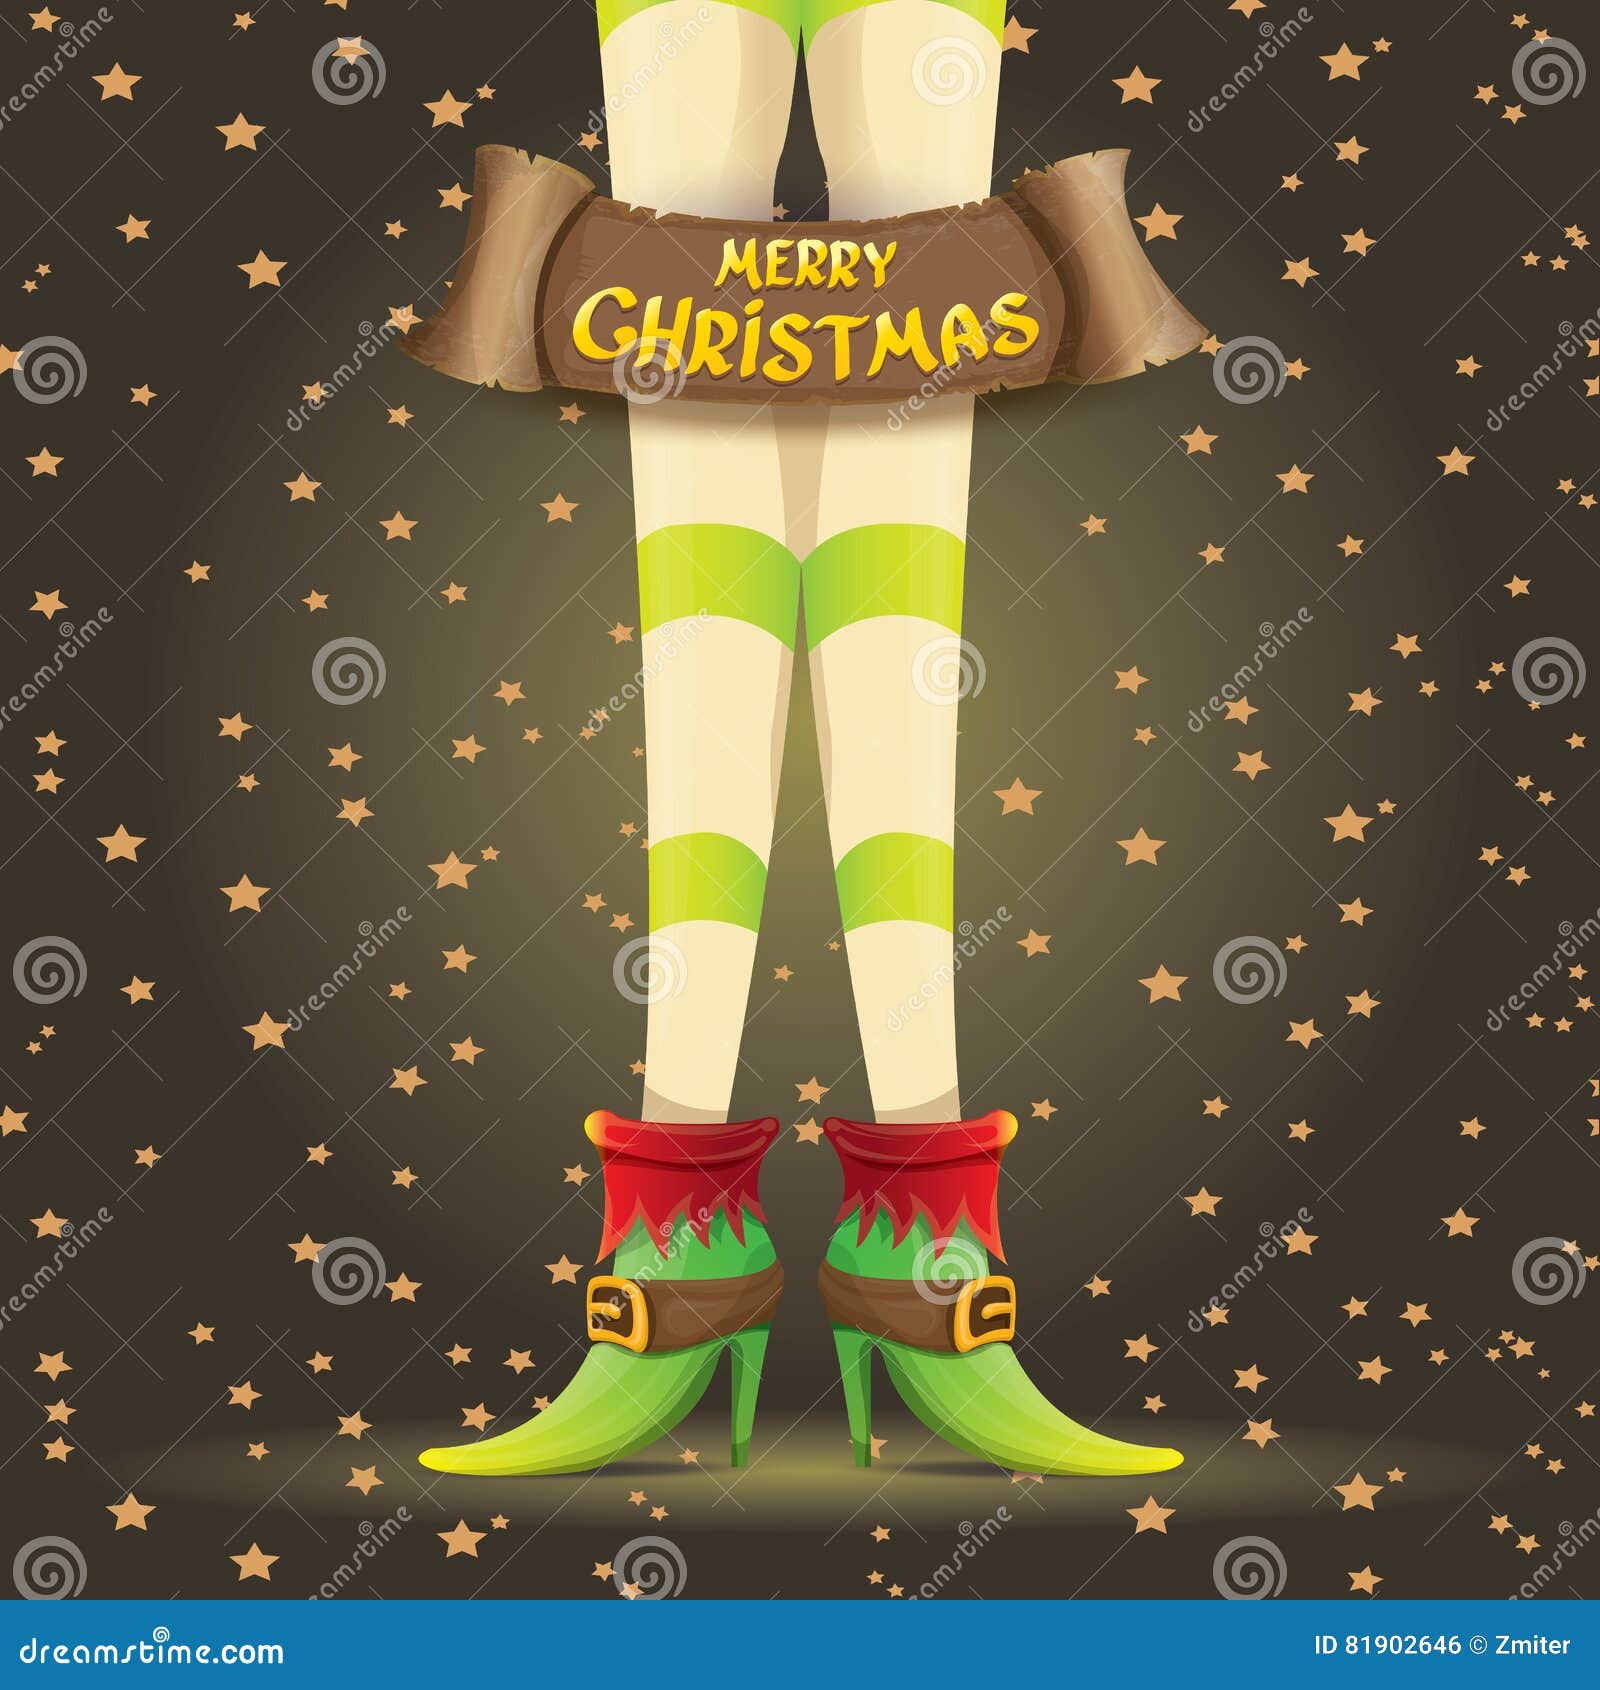 Vector Christmas Cartoon Card With Elf Girls Legs Stock Vector - Illustration of decoration ...